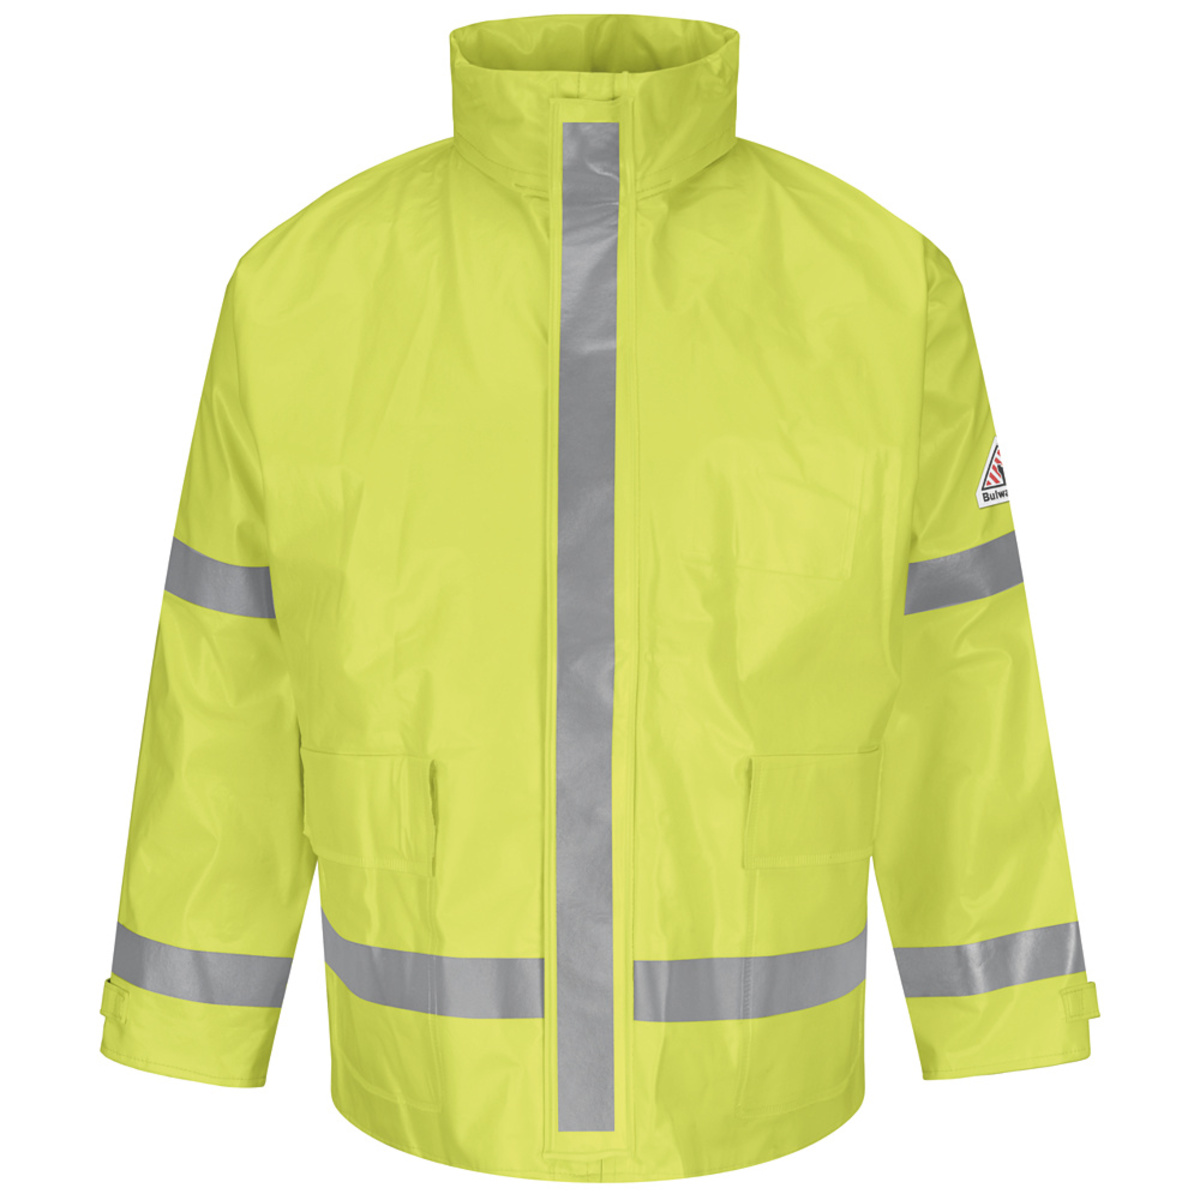 Bulwark® 6X Hi-Viz Yellow Bulwark® PVC  Modacrylic Knit Flame-Resistant Jacket